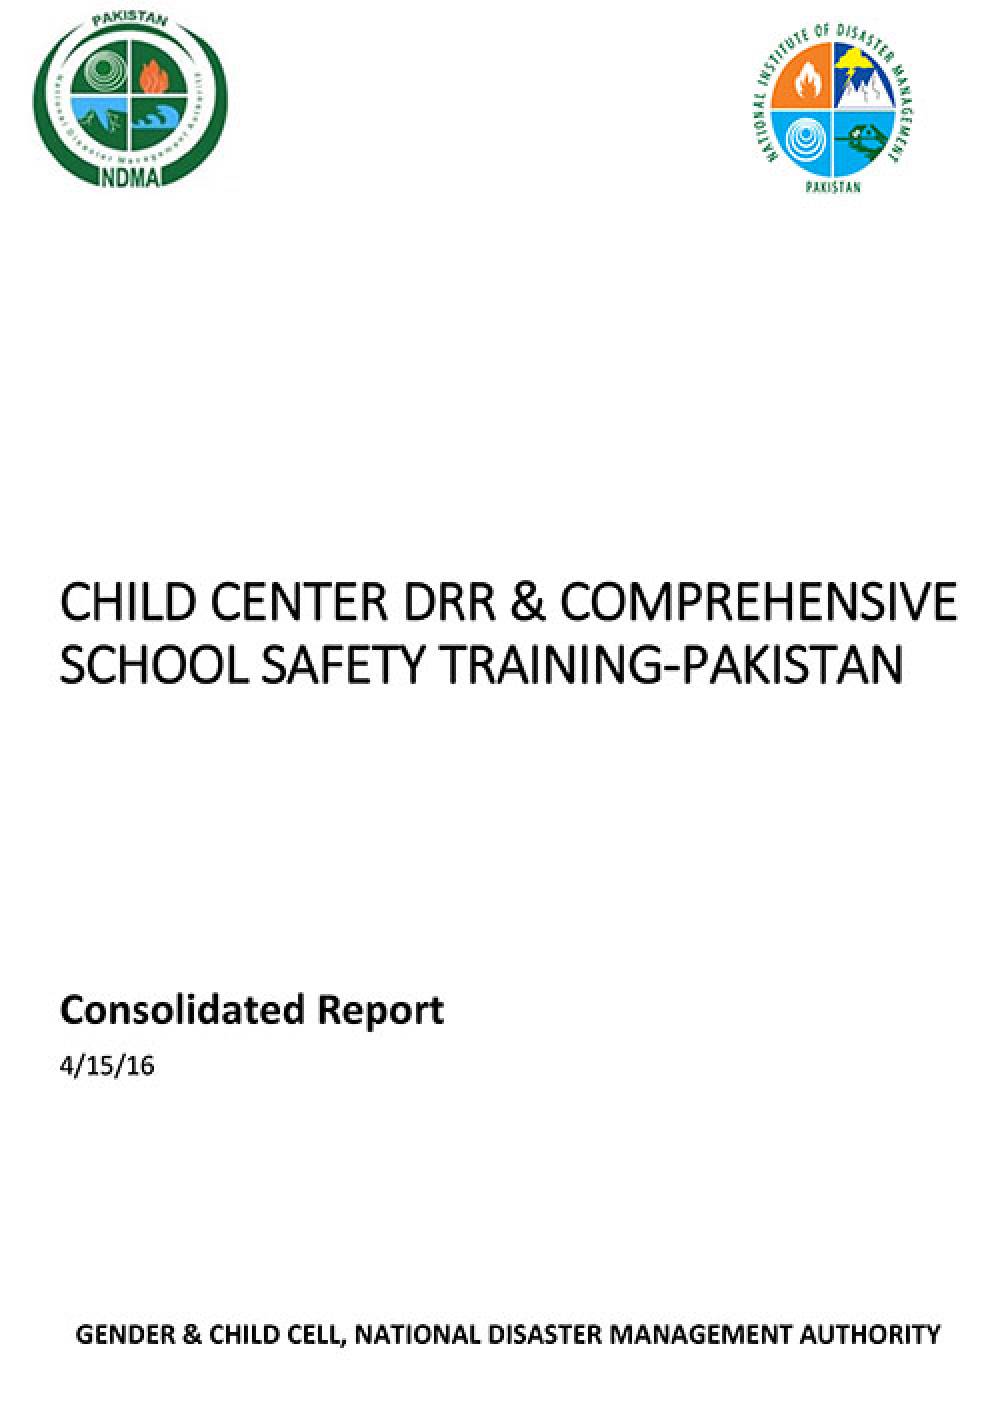 Child Center DRR & Comprehensive School Safety Training-Pakistan Report